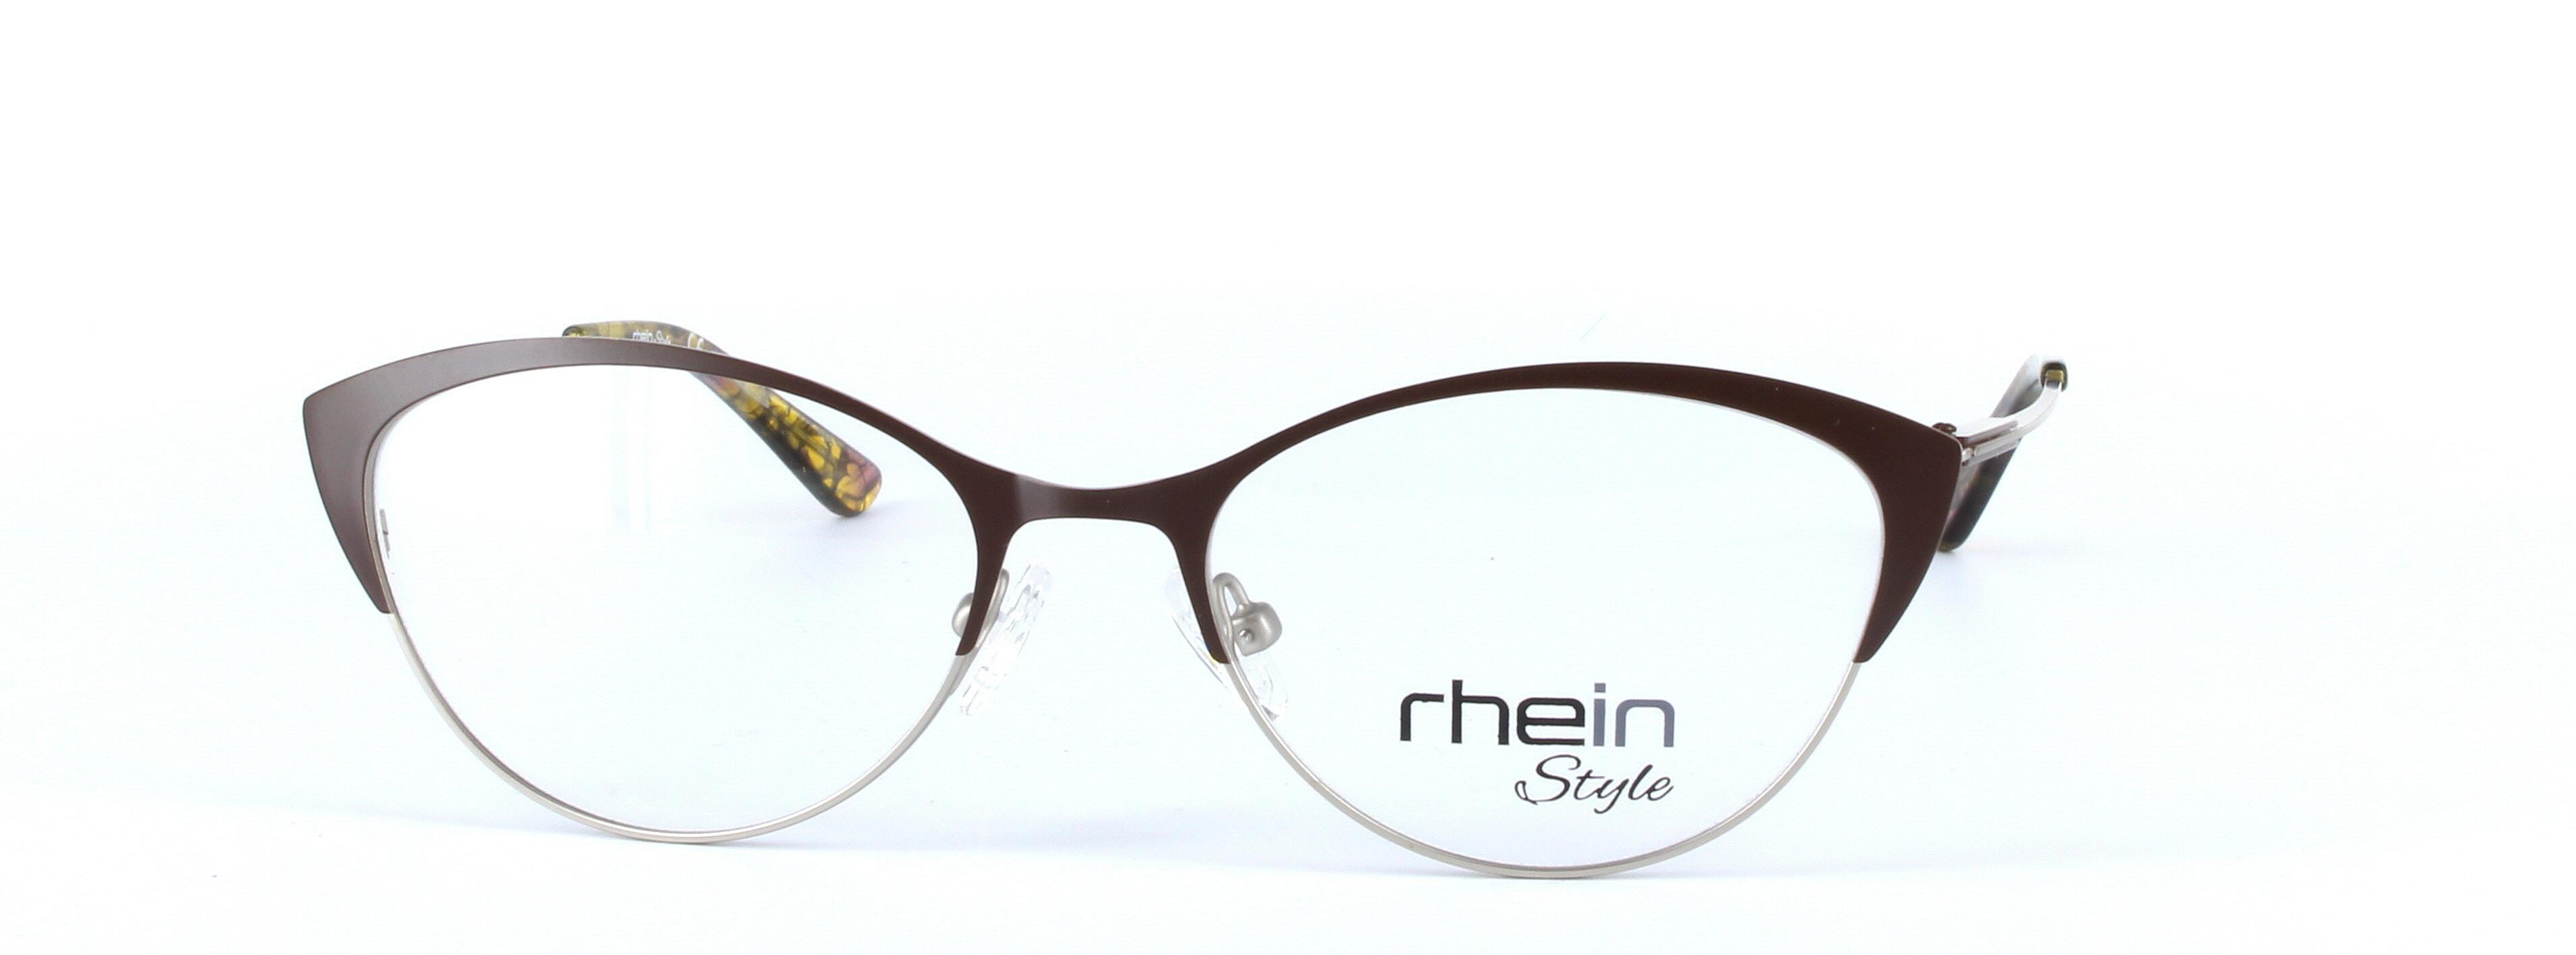 Felicity Purple Full Rim Oval Round Metal Glasses - Image View 1